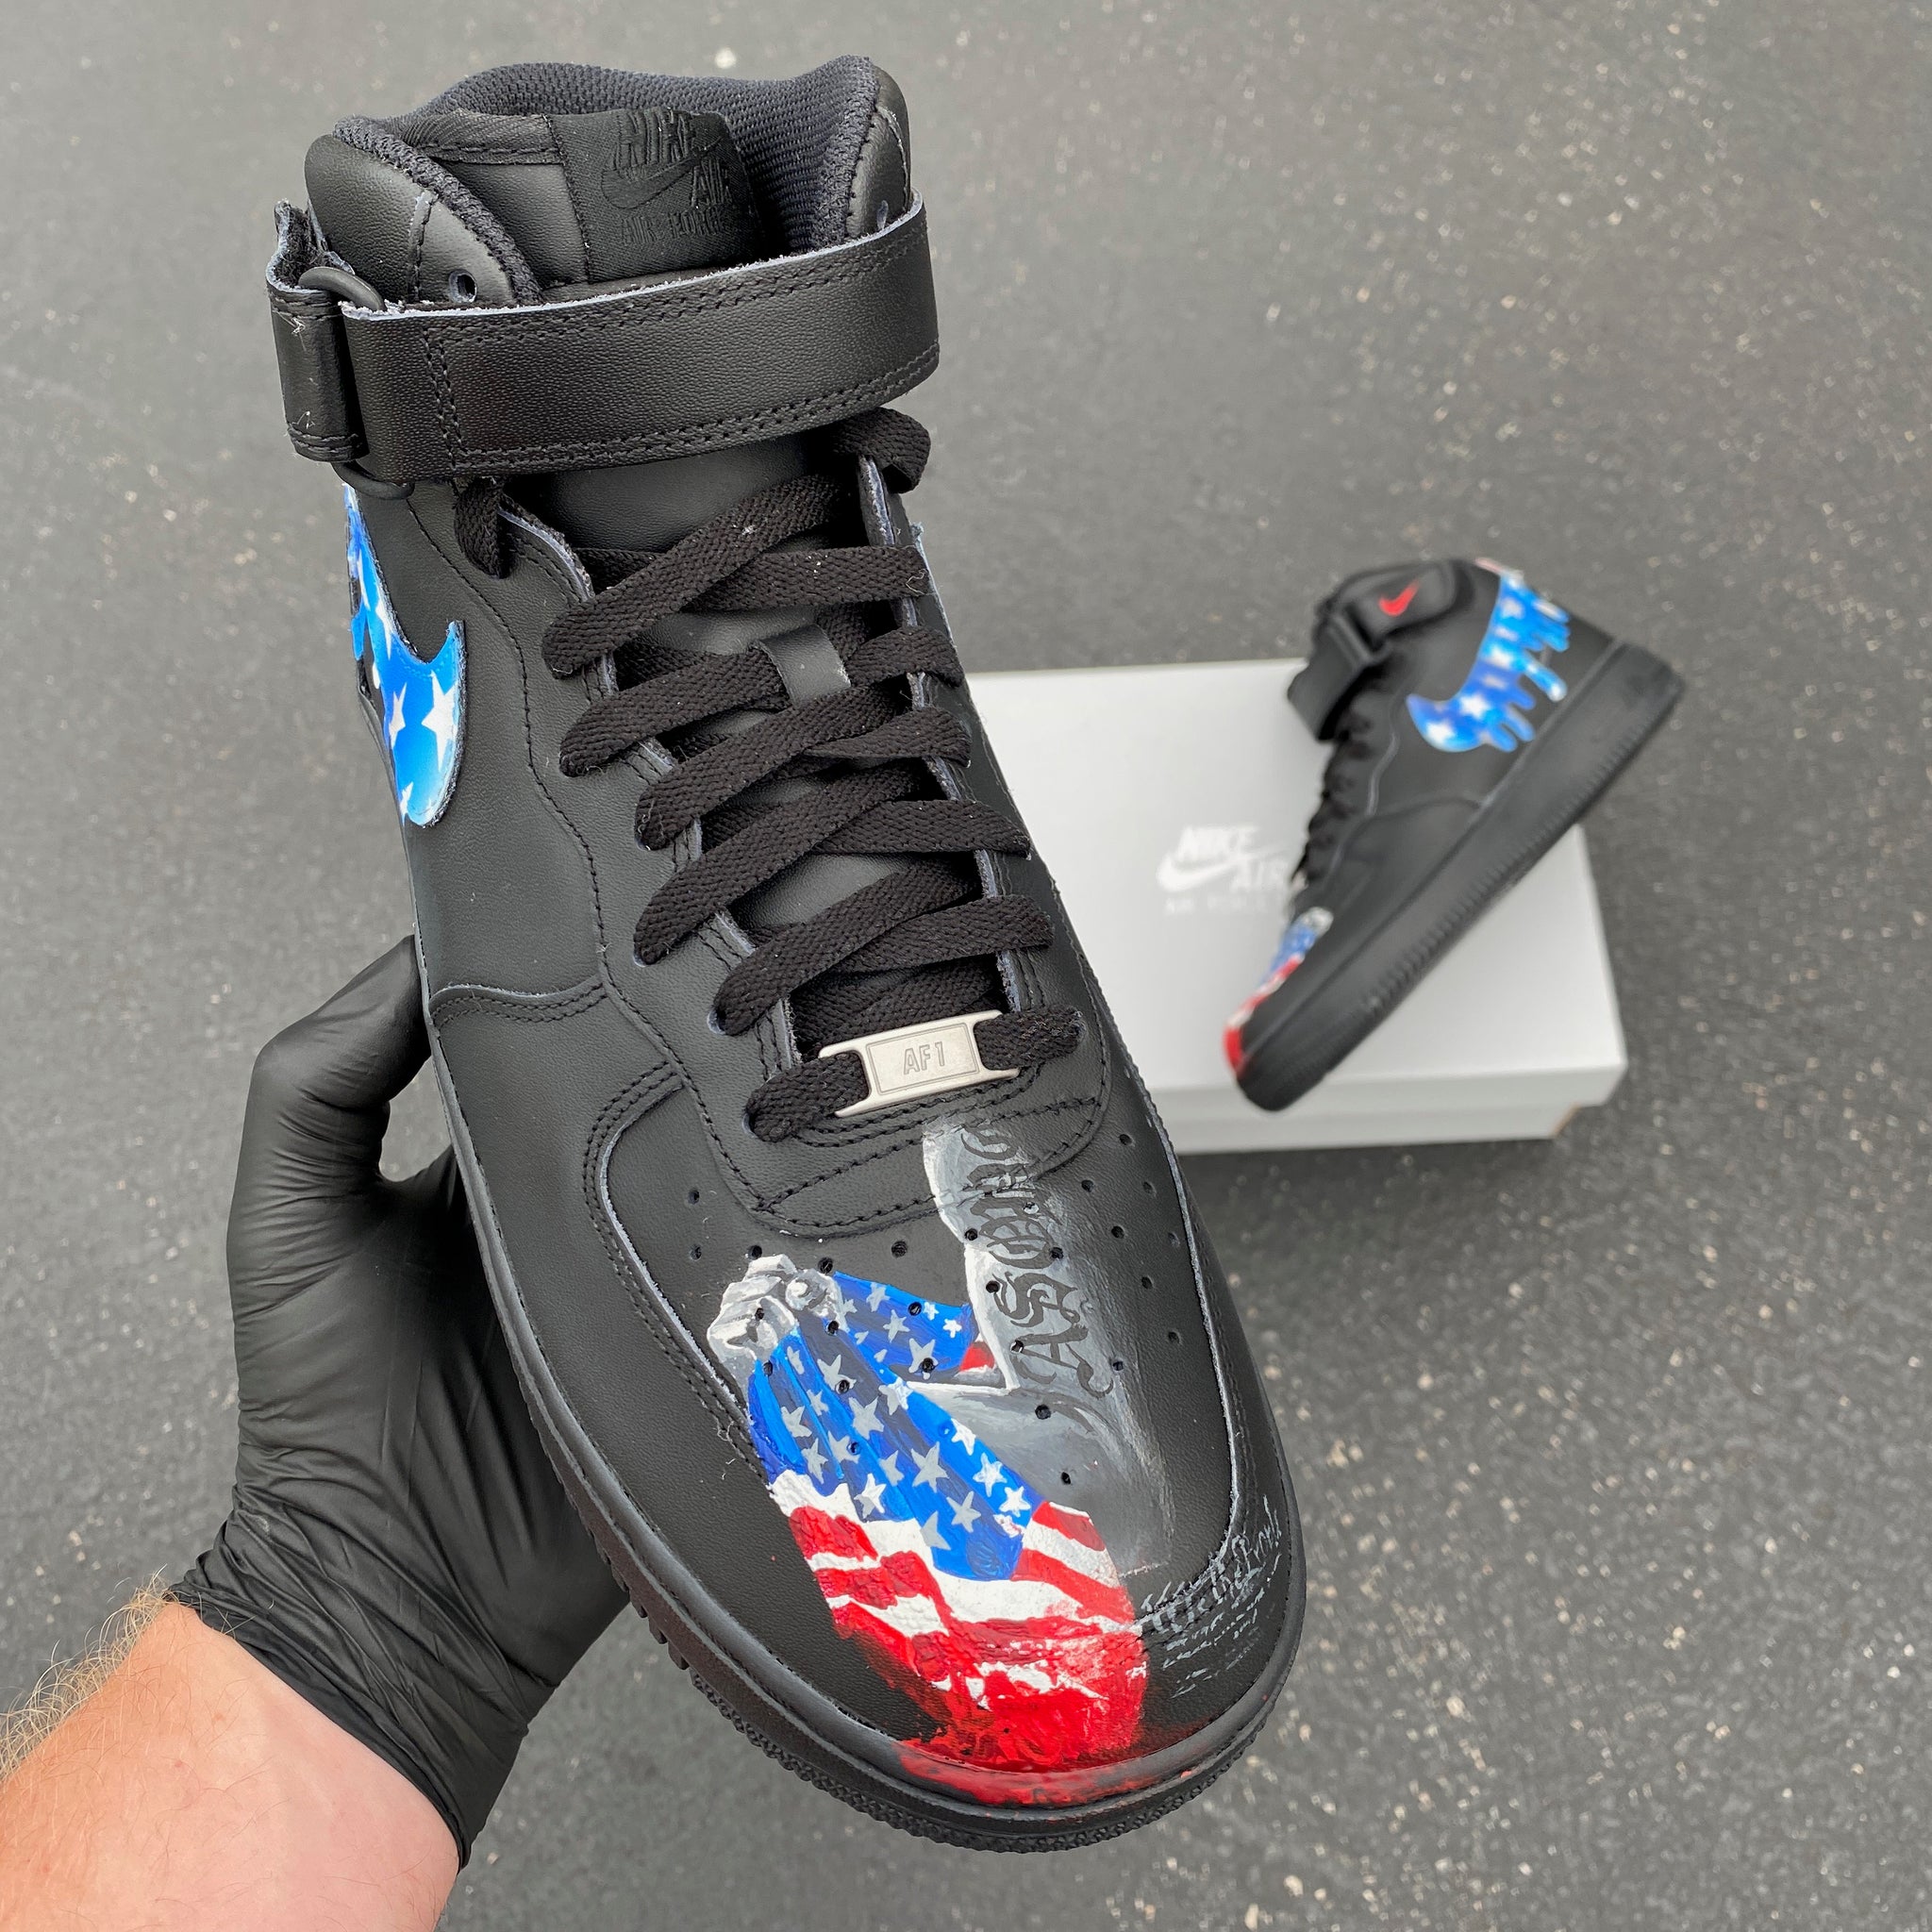 Nike Air Force 1 Low Custom Gray Swoosh AF1 Unisex Shoes for Men